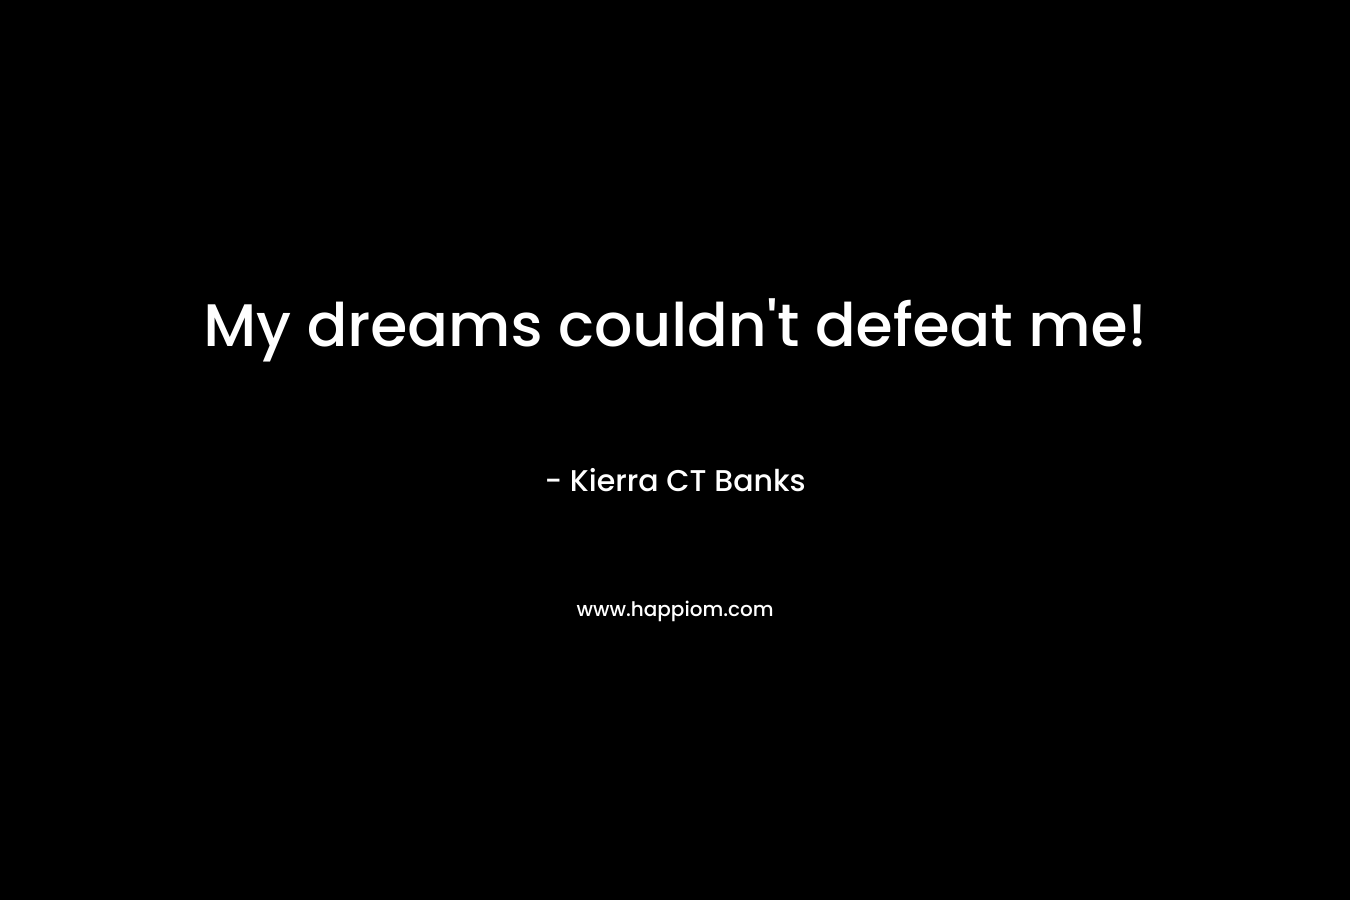 My dreams couldn't defeat me!